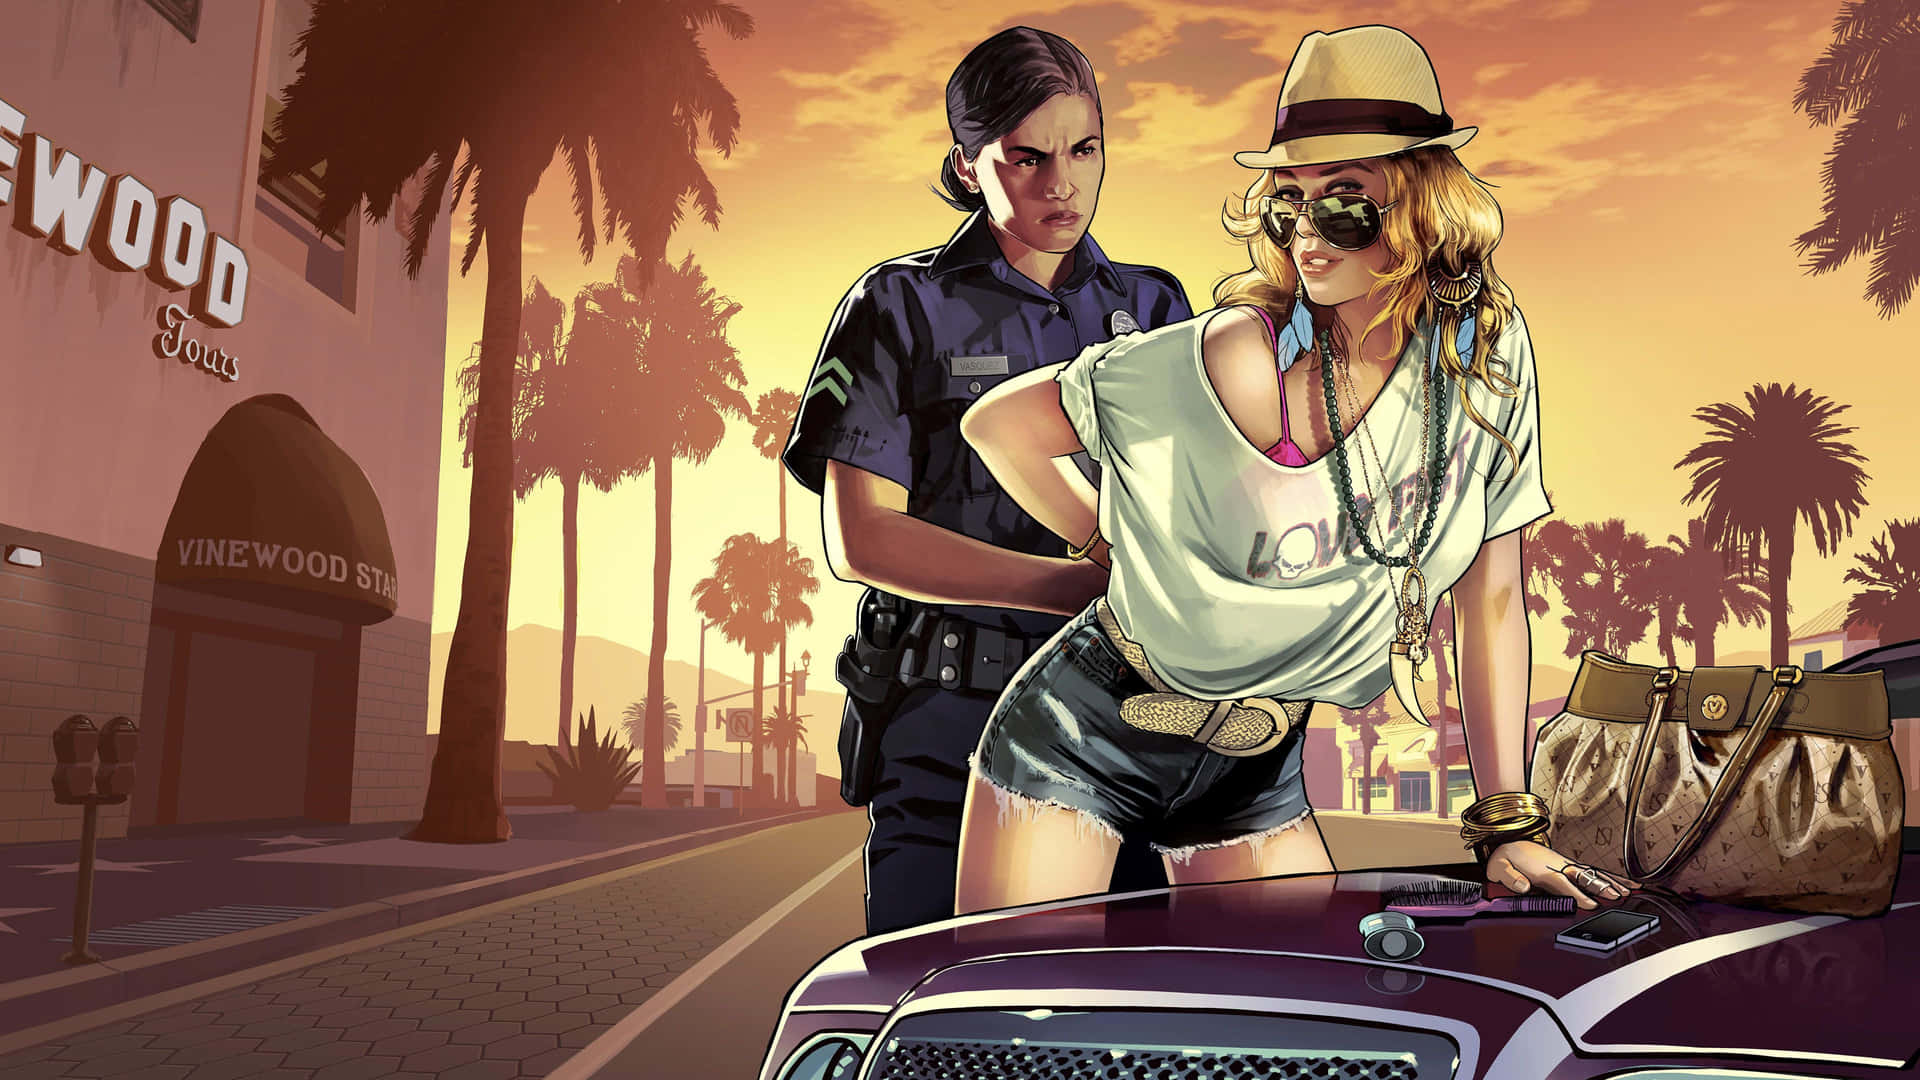 Grand Theft Auto 5 - Explore Los Santos in Stunning 4K Wallpaper